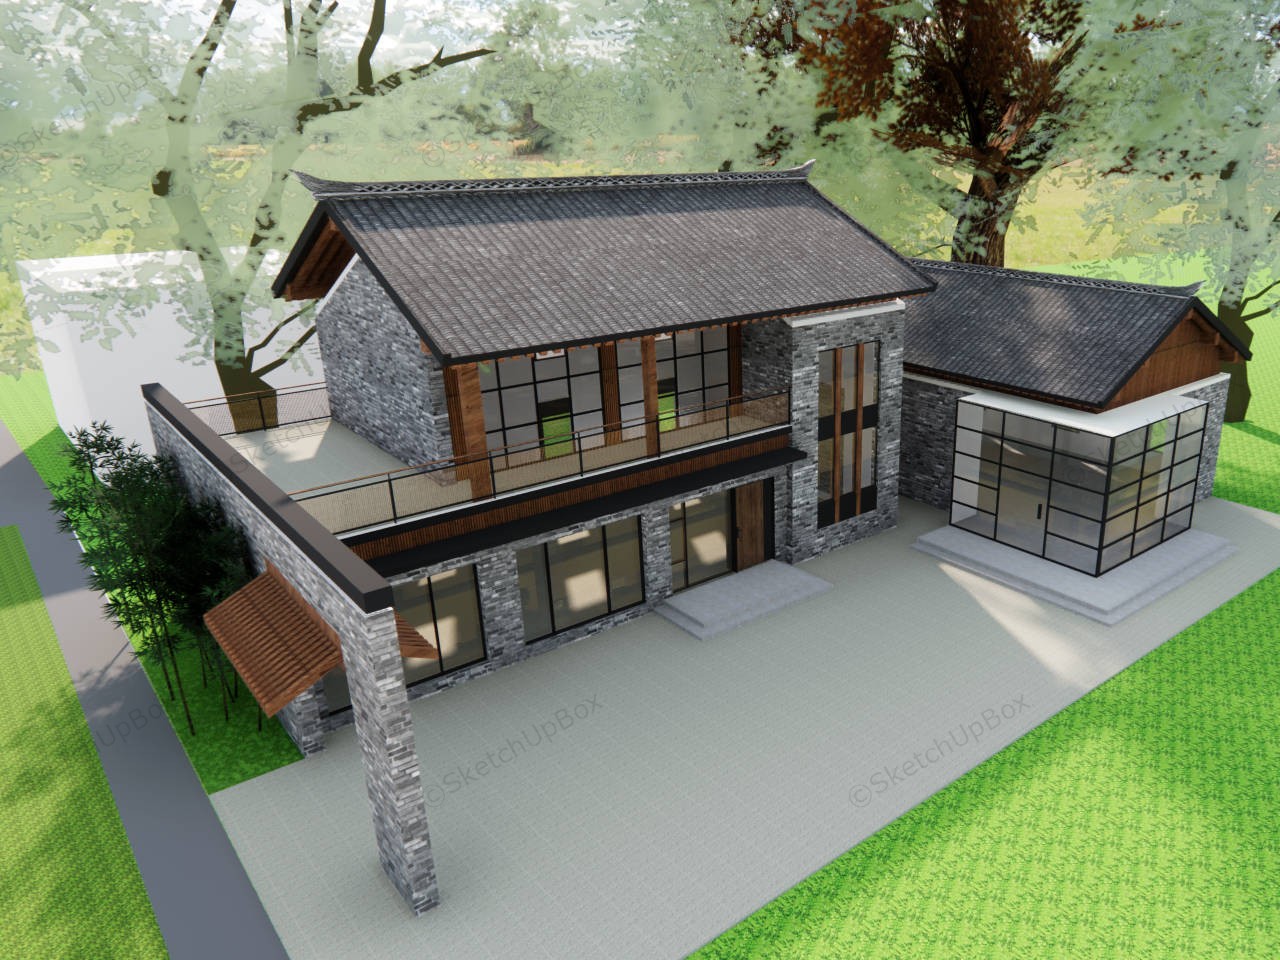 Small Country Inn Design sketchup model preview - SketchupBox